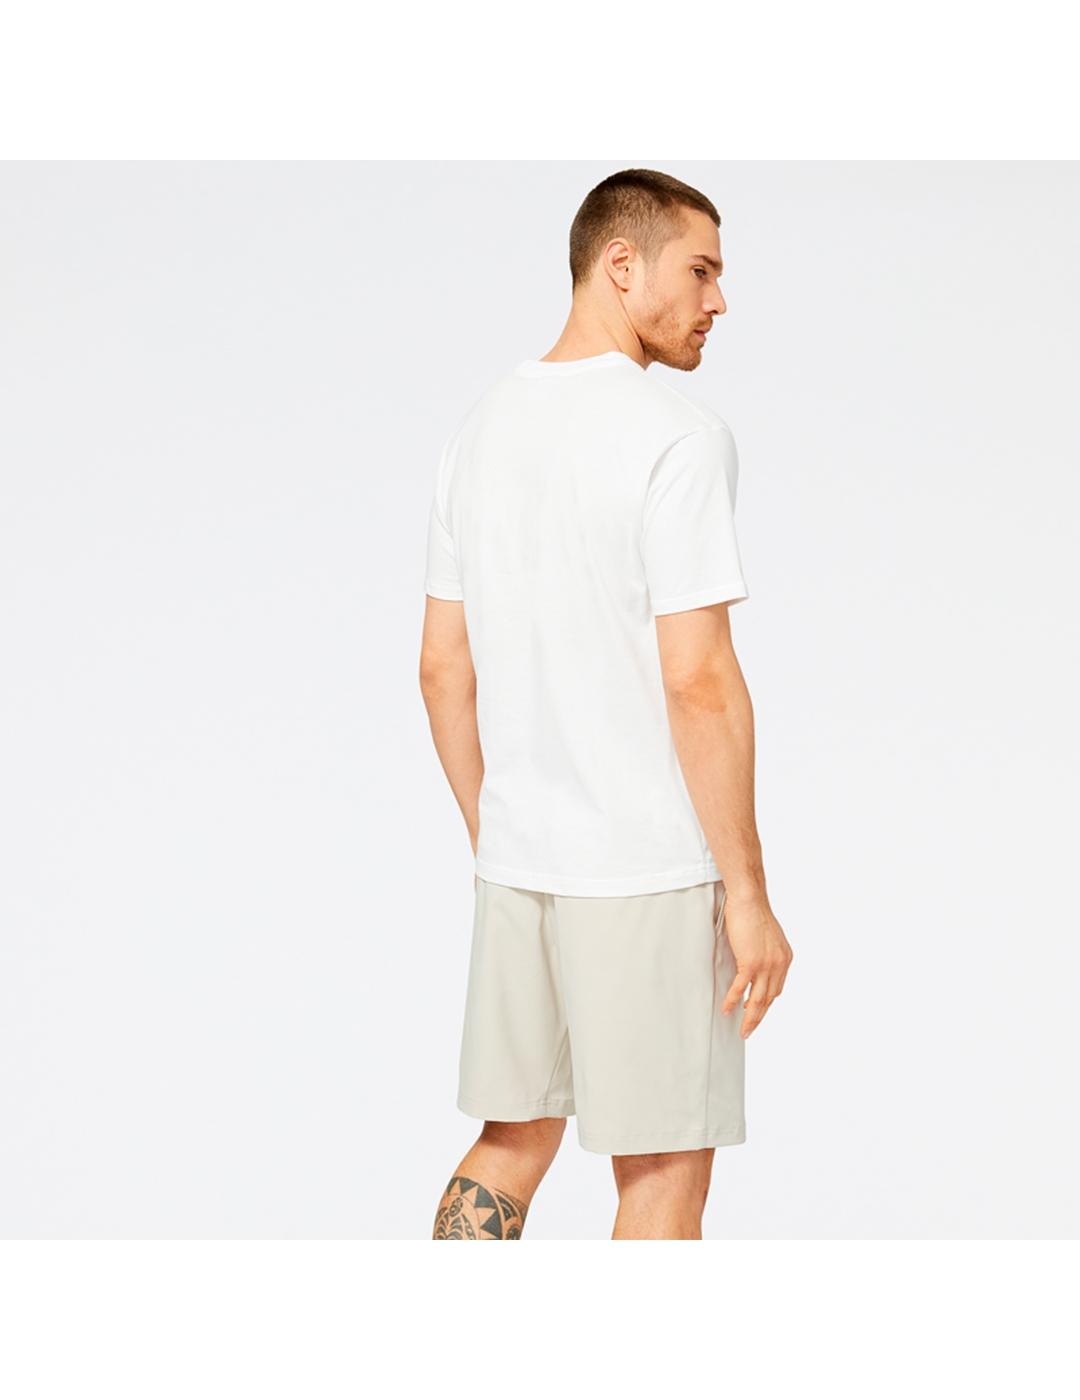 Camiseta New Balance MT23569WT blanca para hombre